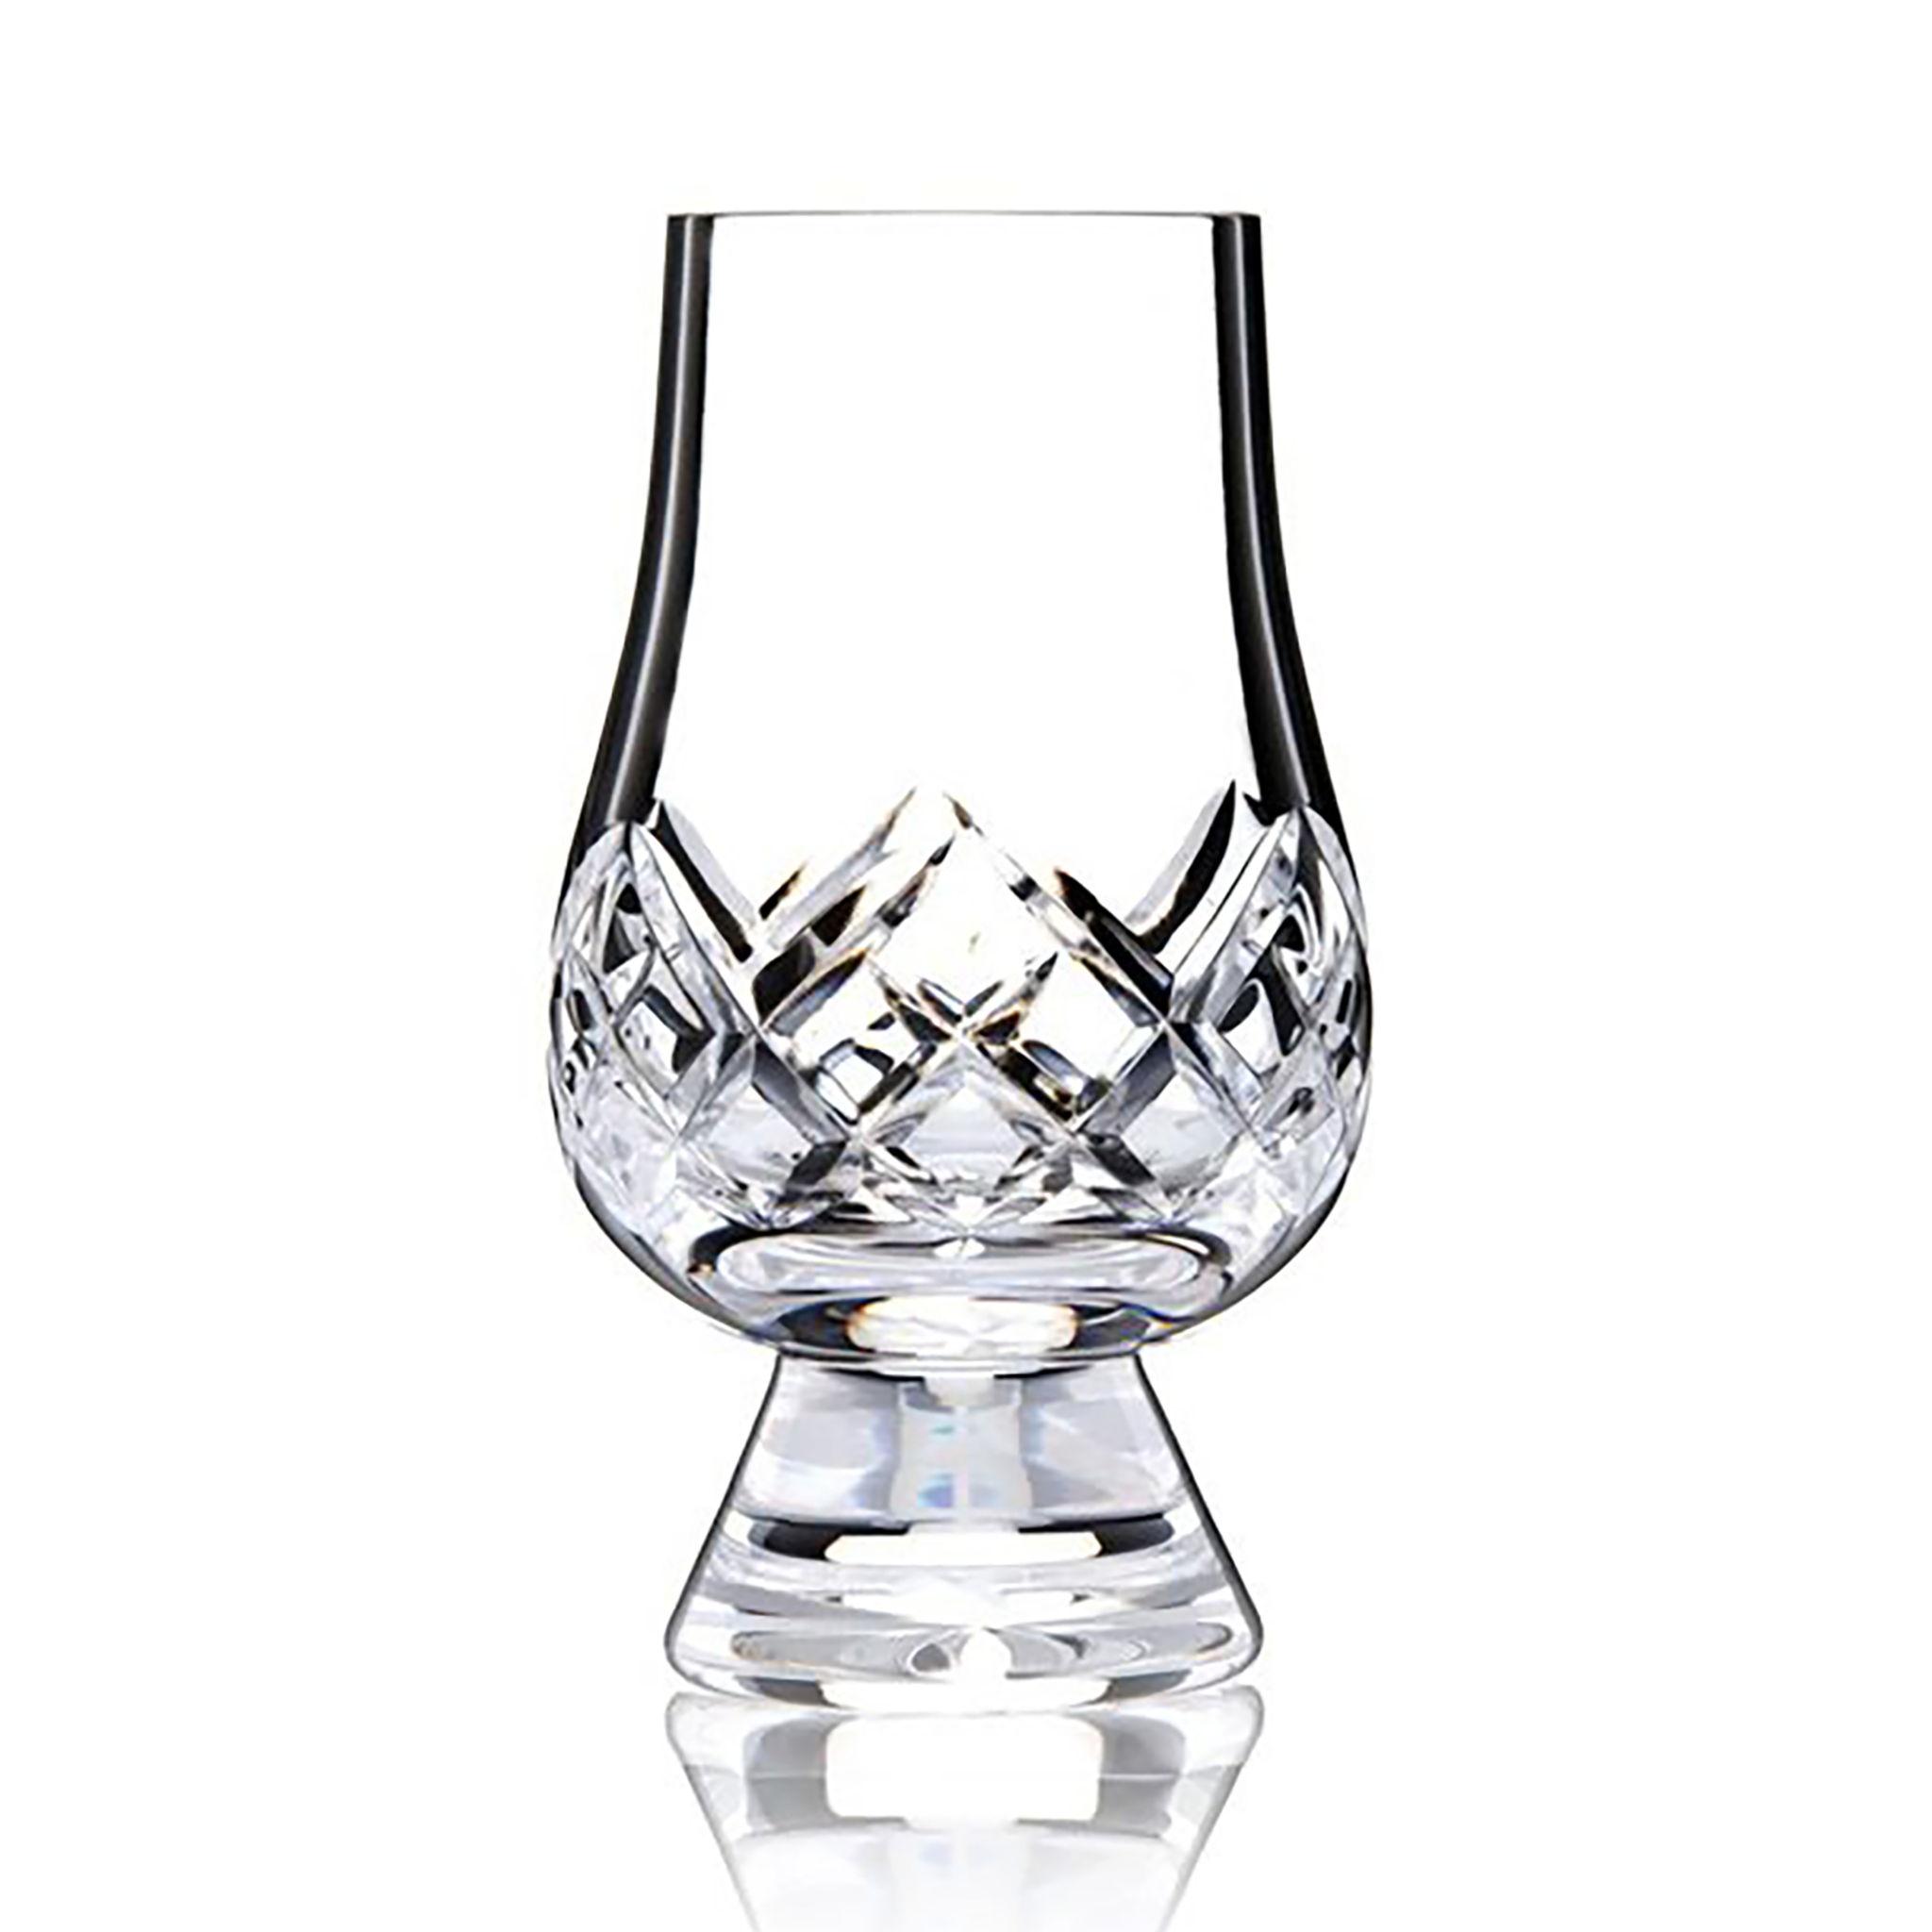 Cut Glencairn Glass - Cut Crystal Glassware